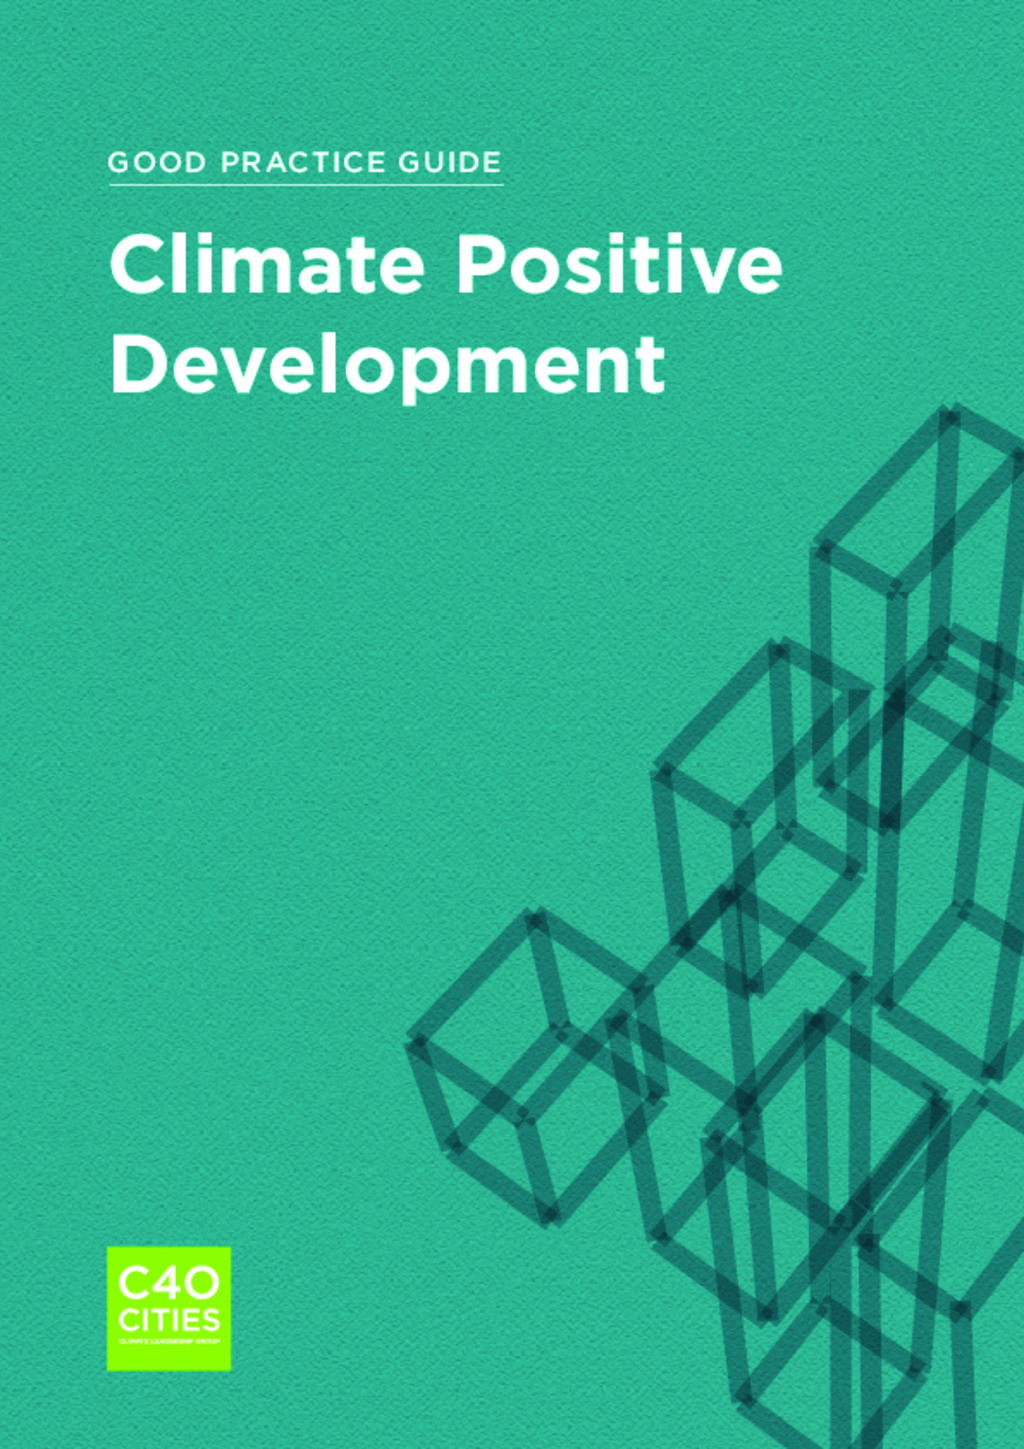 Good Practice Guide - Climate Positive Development